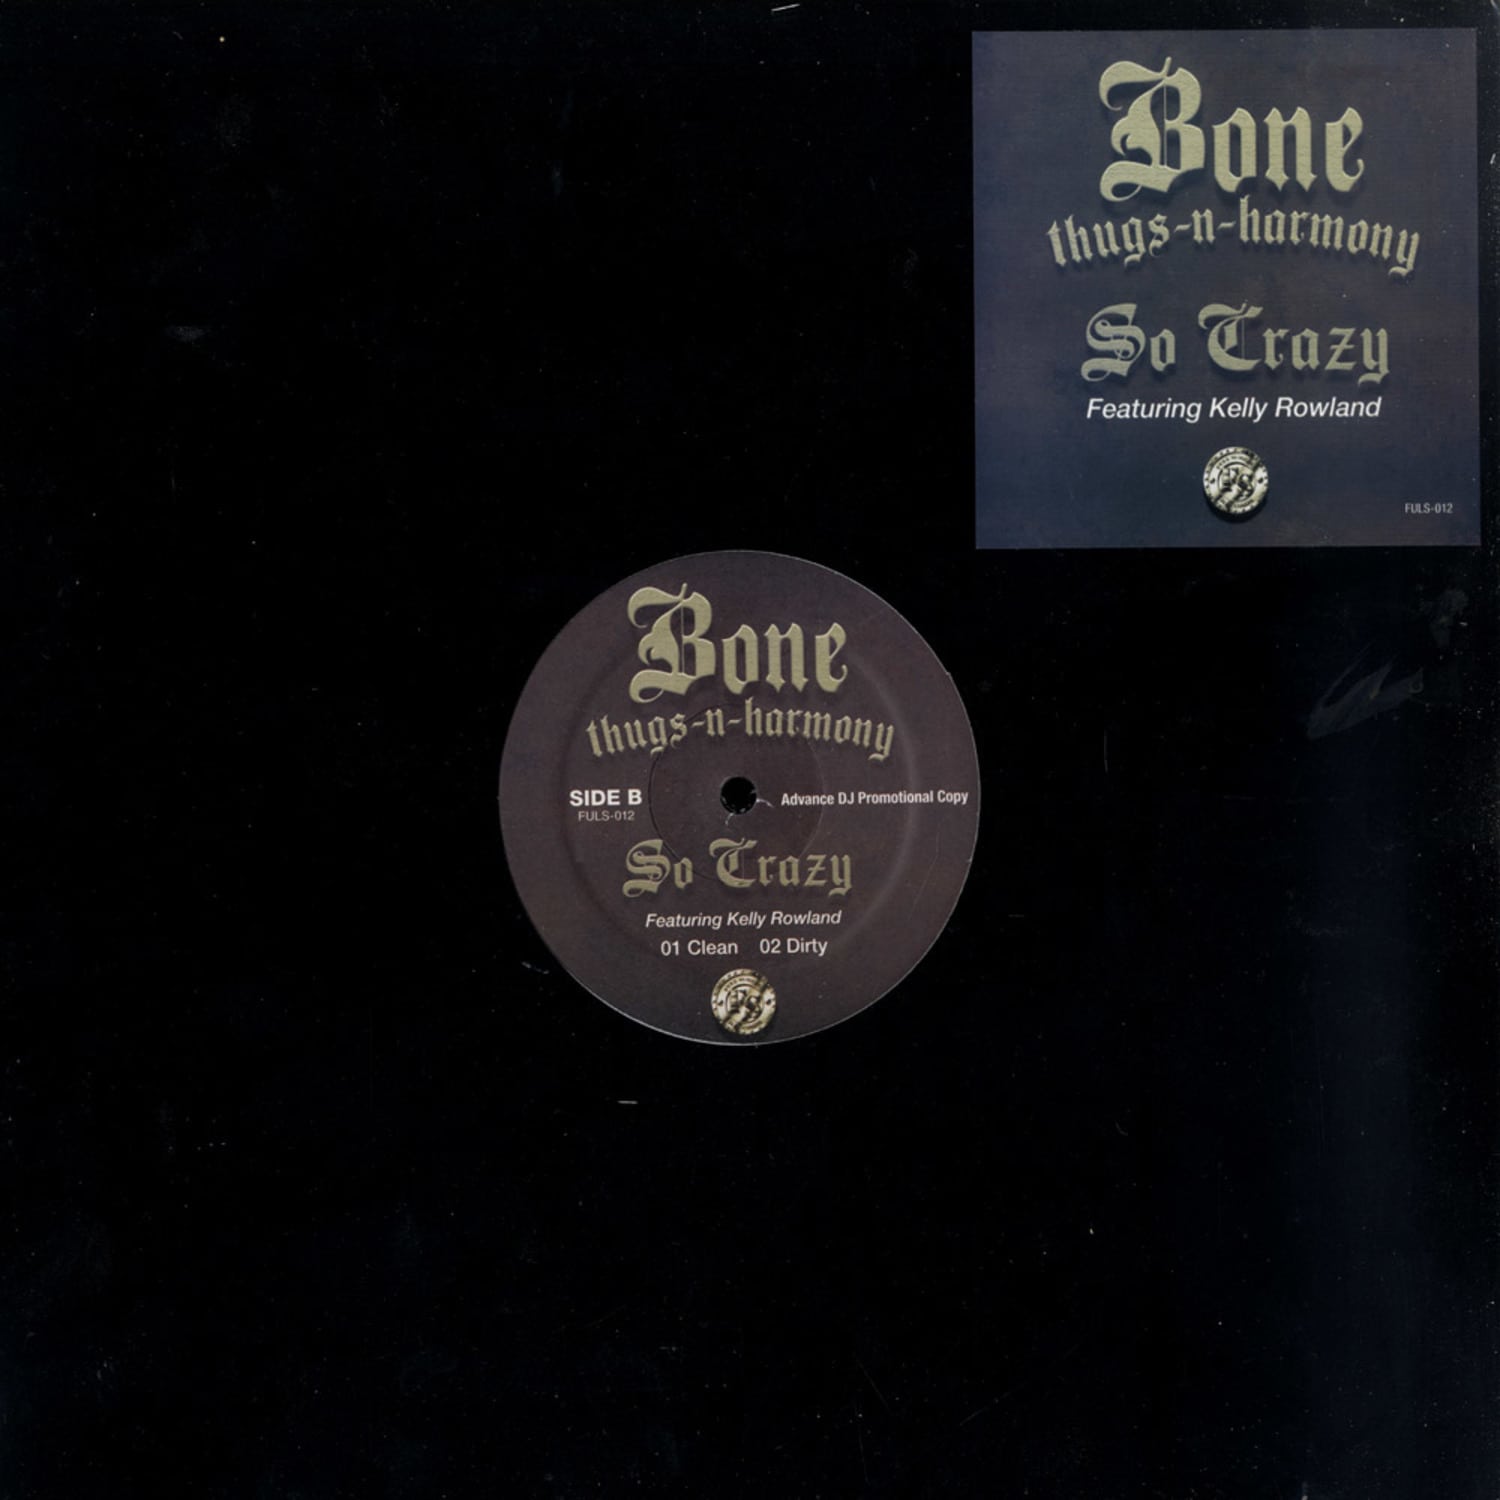 Bone Thugs N Harmony - SO CRAZY